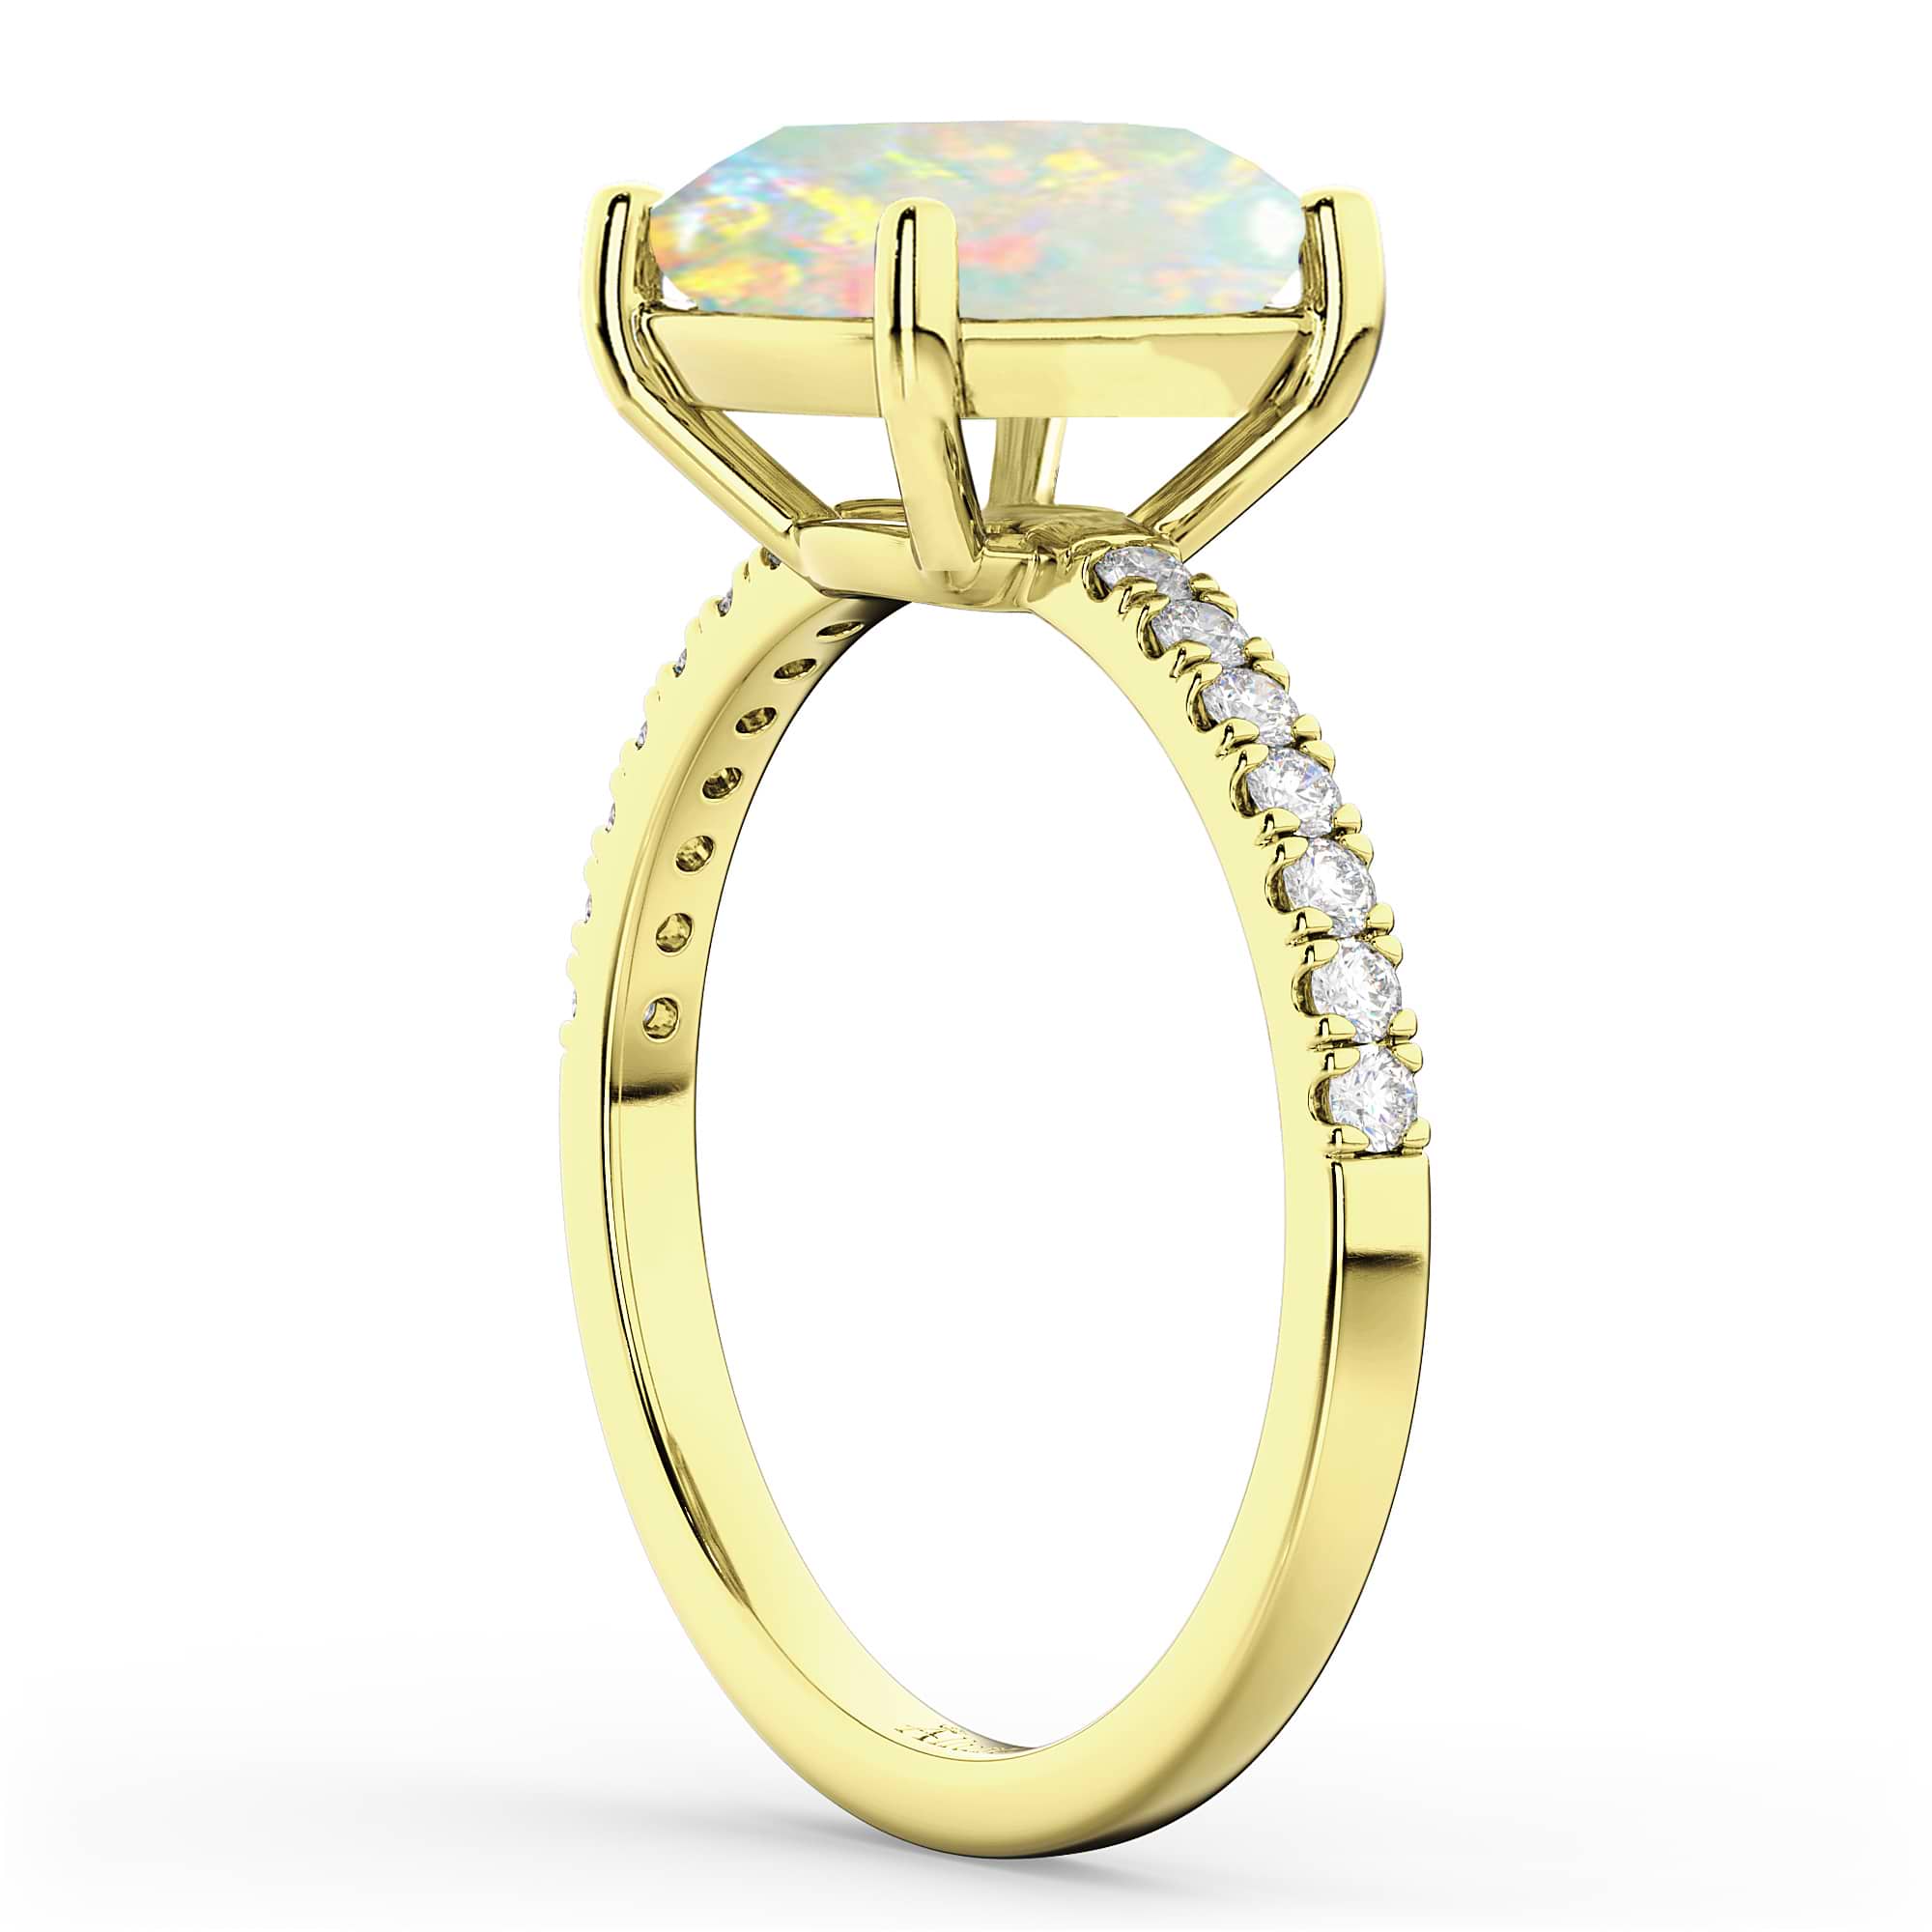 Cushion Cut Opal & Diamond Engagement Ring 14k Yellow Gold (2.81ct)